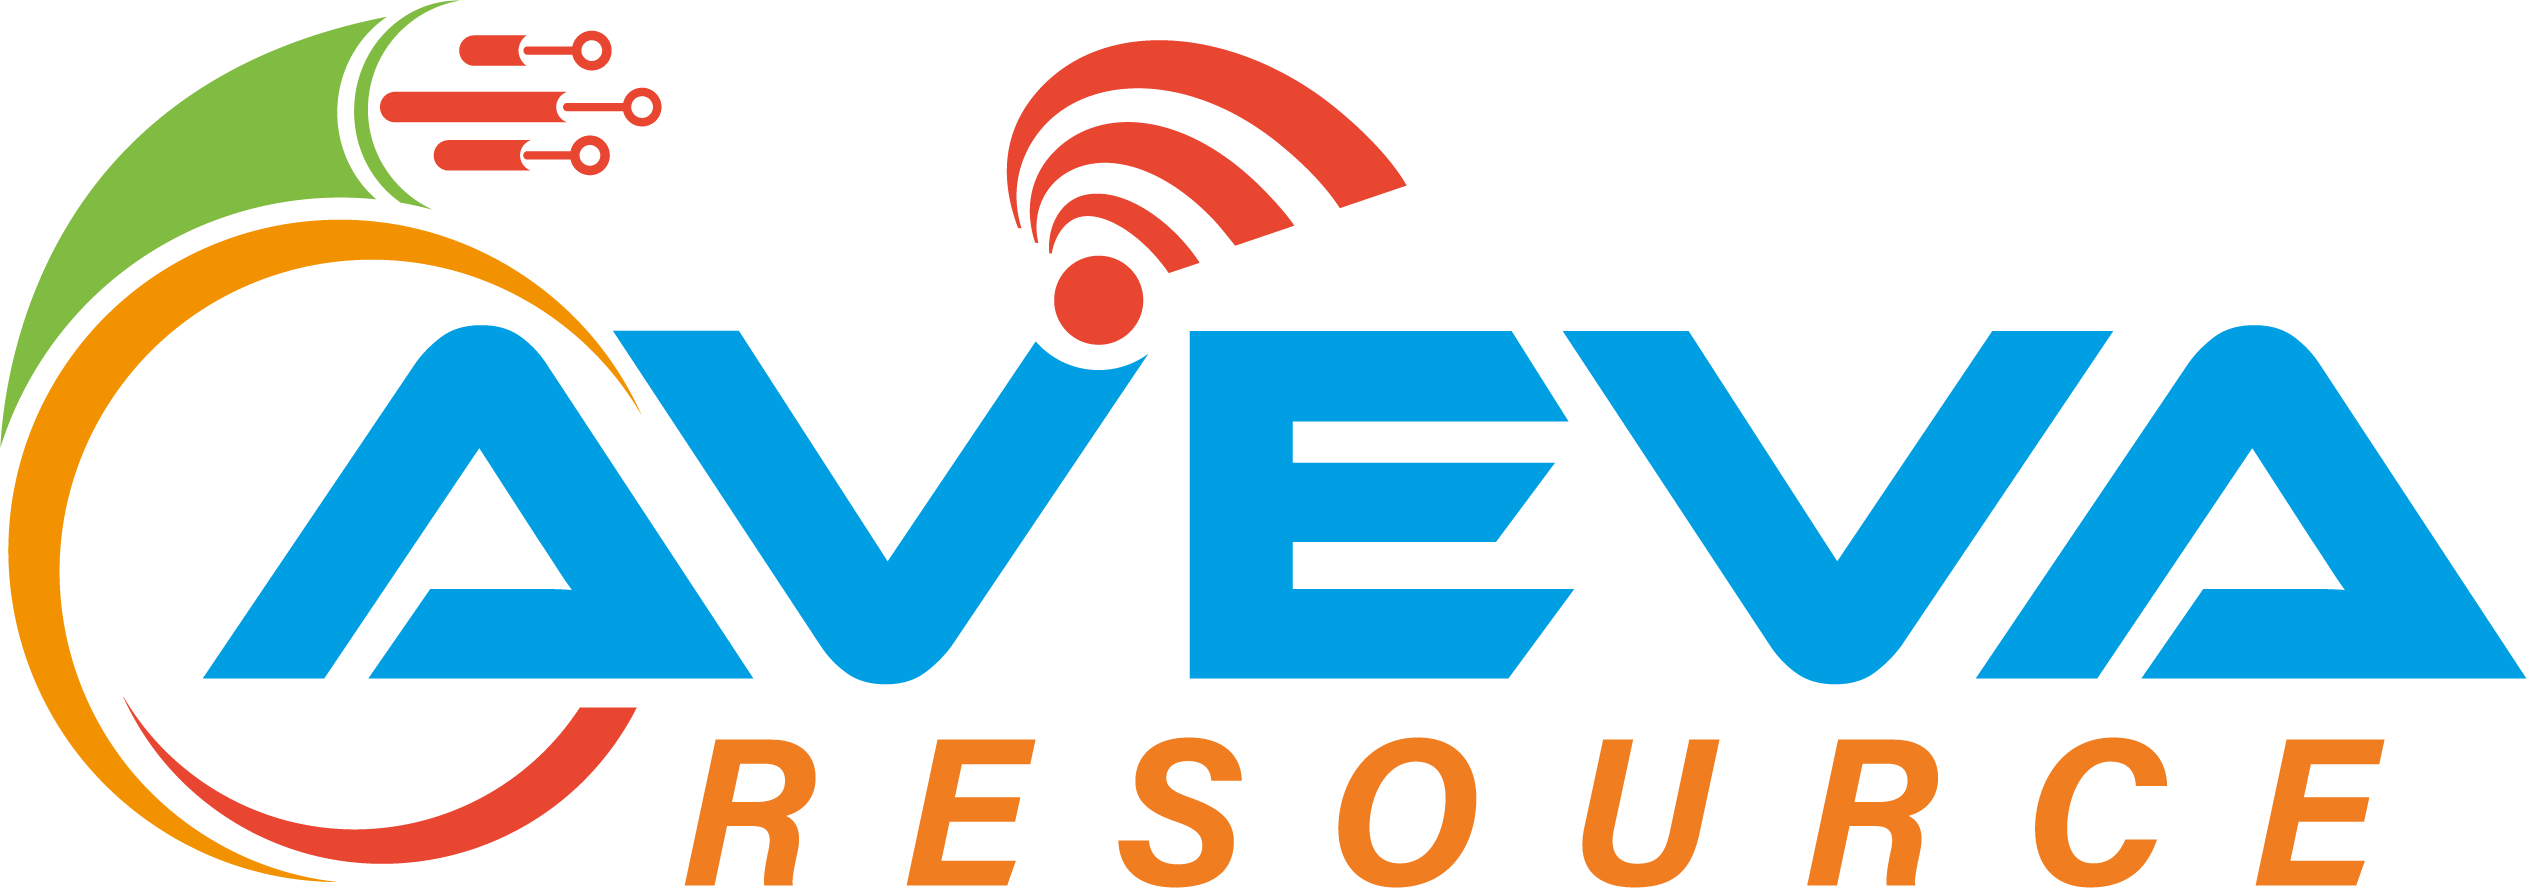 AVEVA RESOURCE-logo